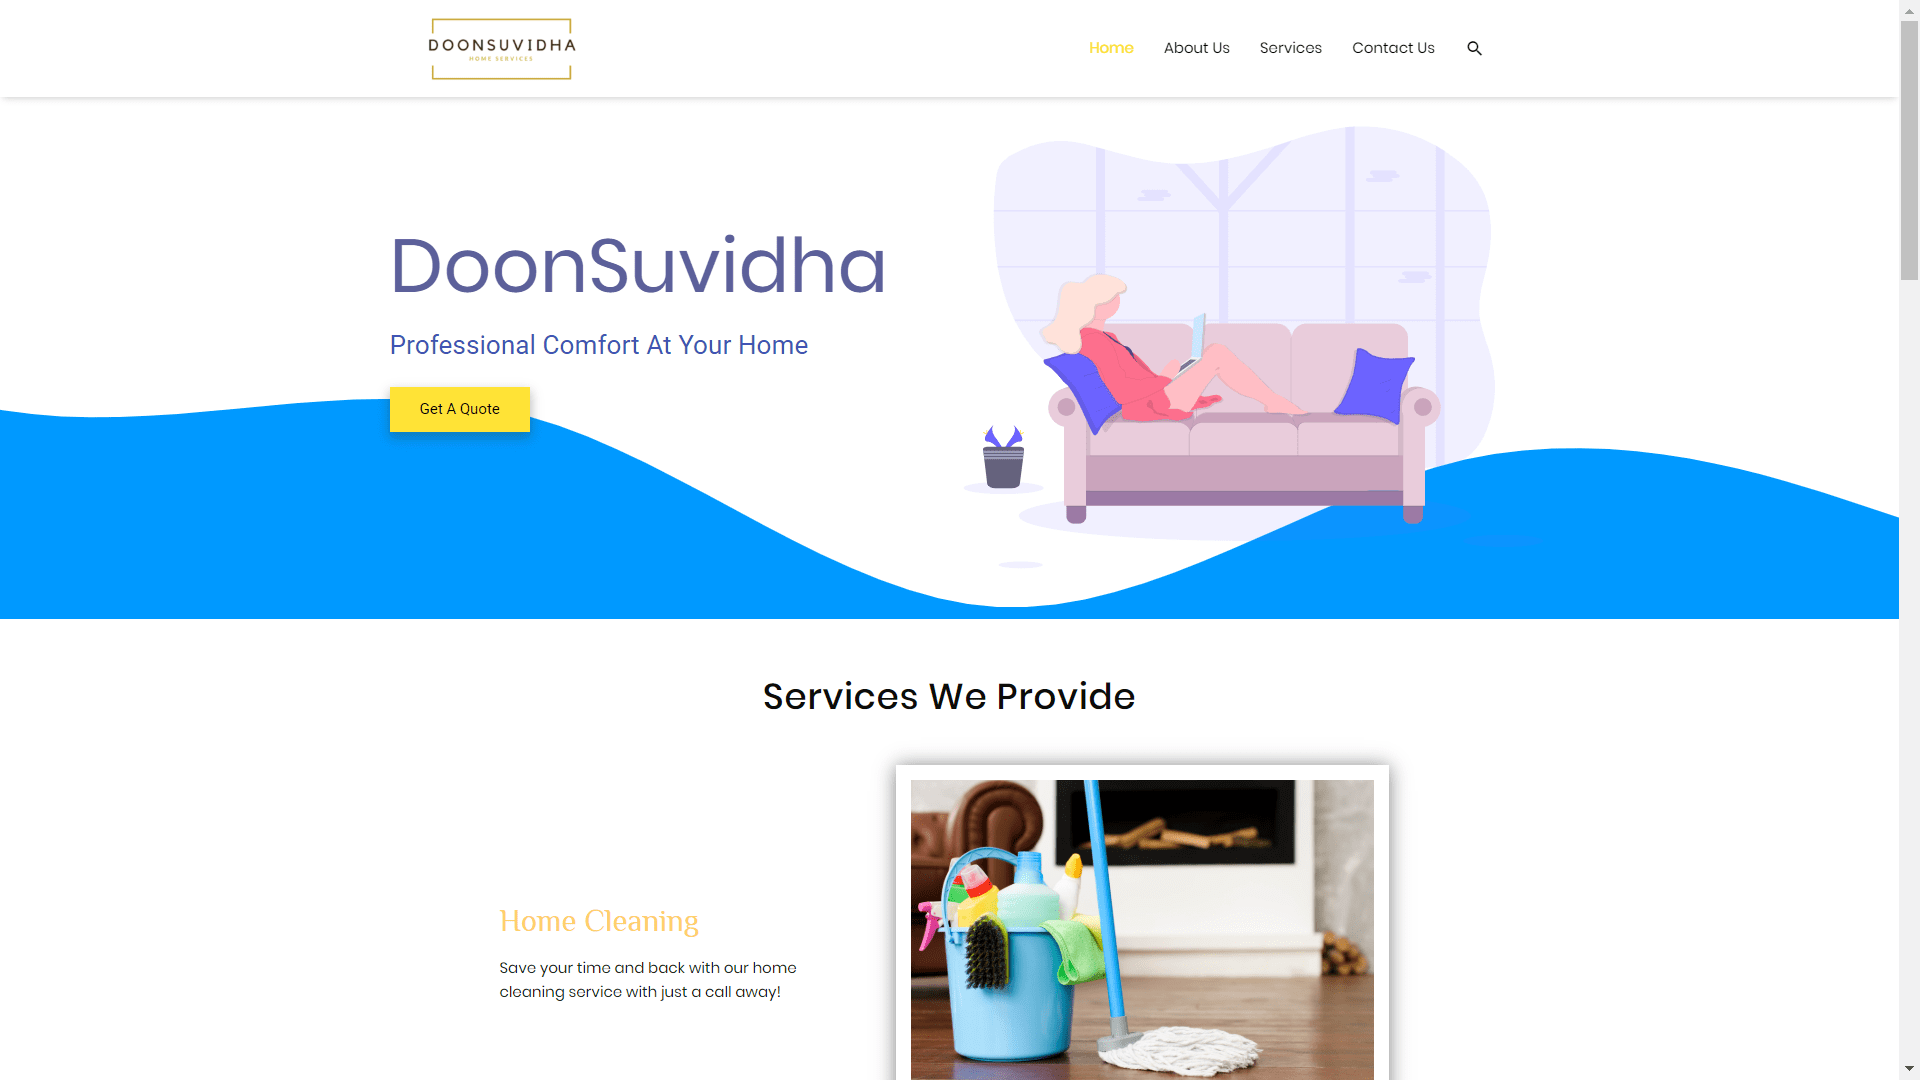 Doon-Suvidha Website Image